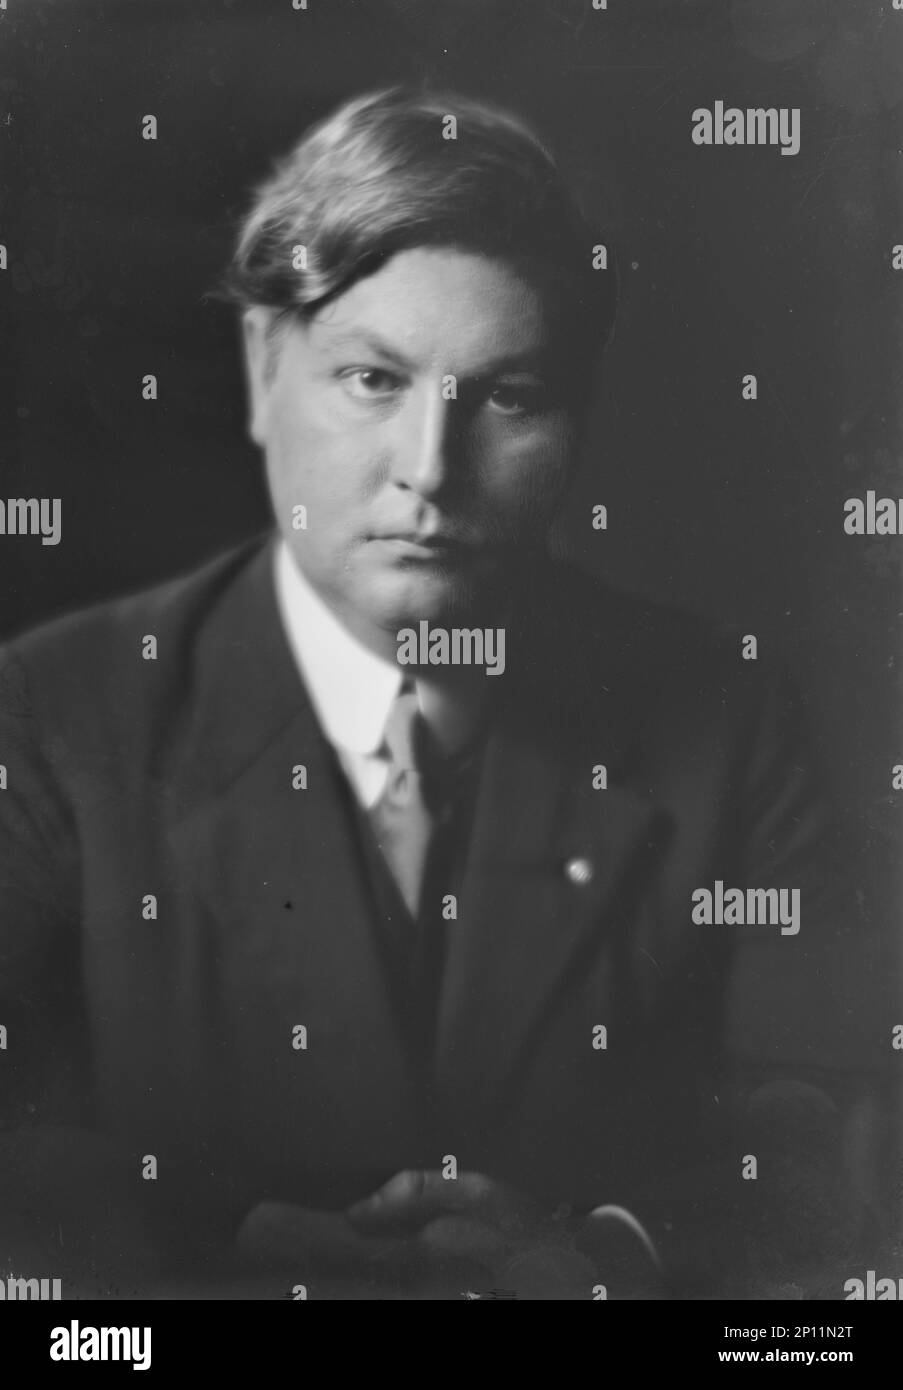 Hamilton, Clayton, Mr., portrait photograph, 1917 Sept. 20. Stock Photo